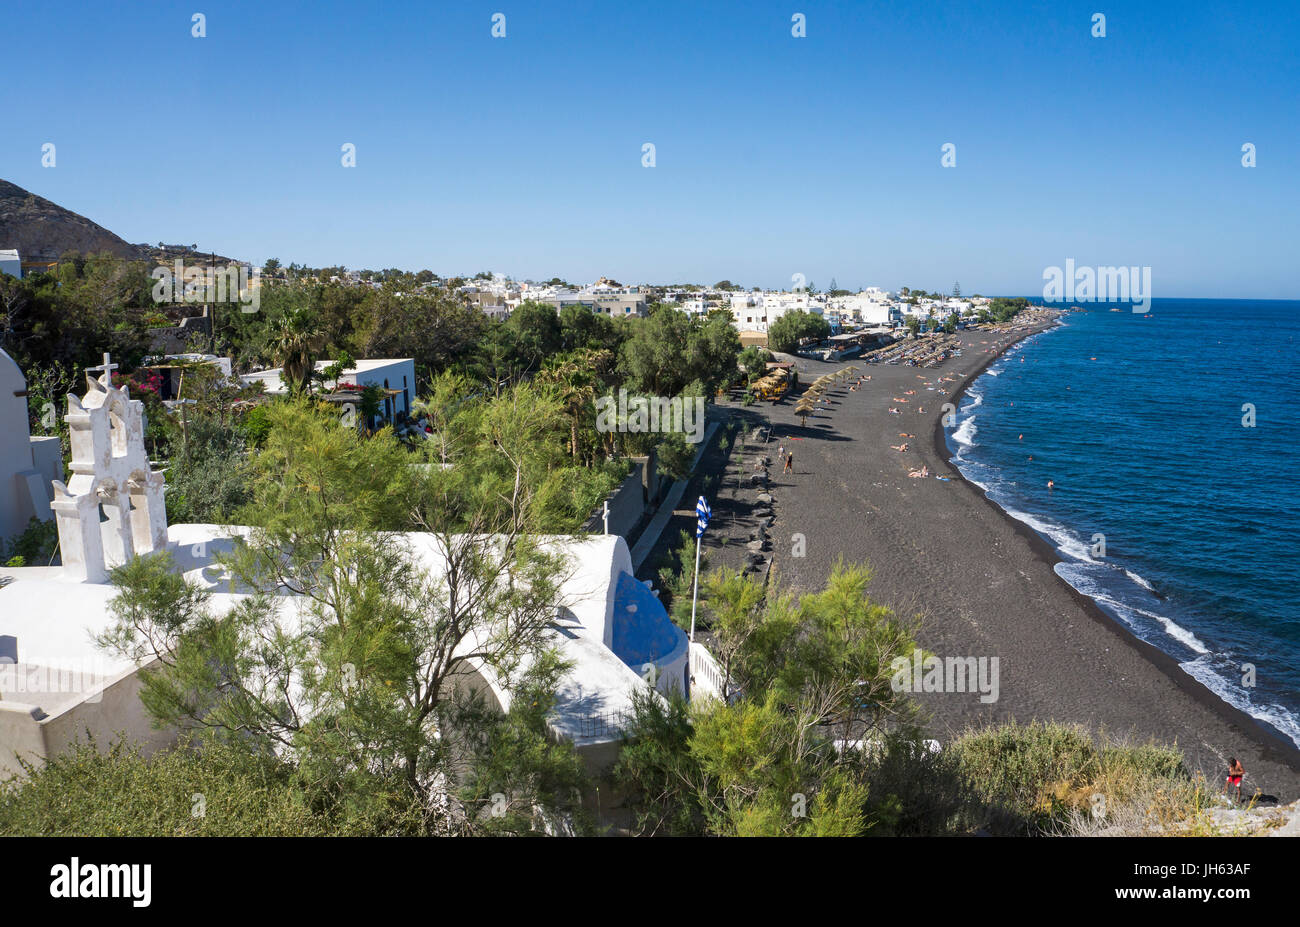 Blick von der kapelle Agios Nikolaos auf den Kamari beach, badestrand bei kamari, santorin, kykladen, aegaeis, griechenland, mittelmeer, europa | view Foto Stock